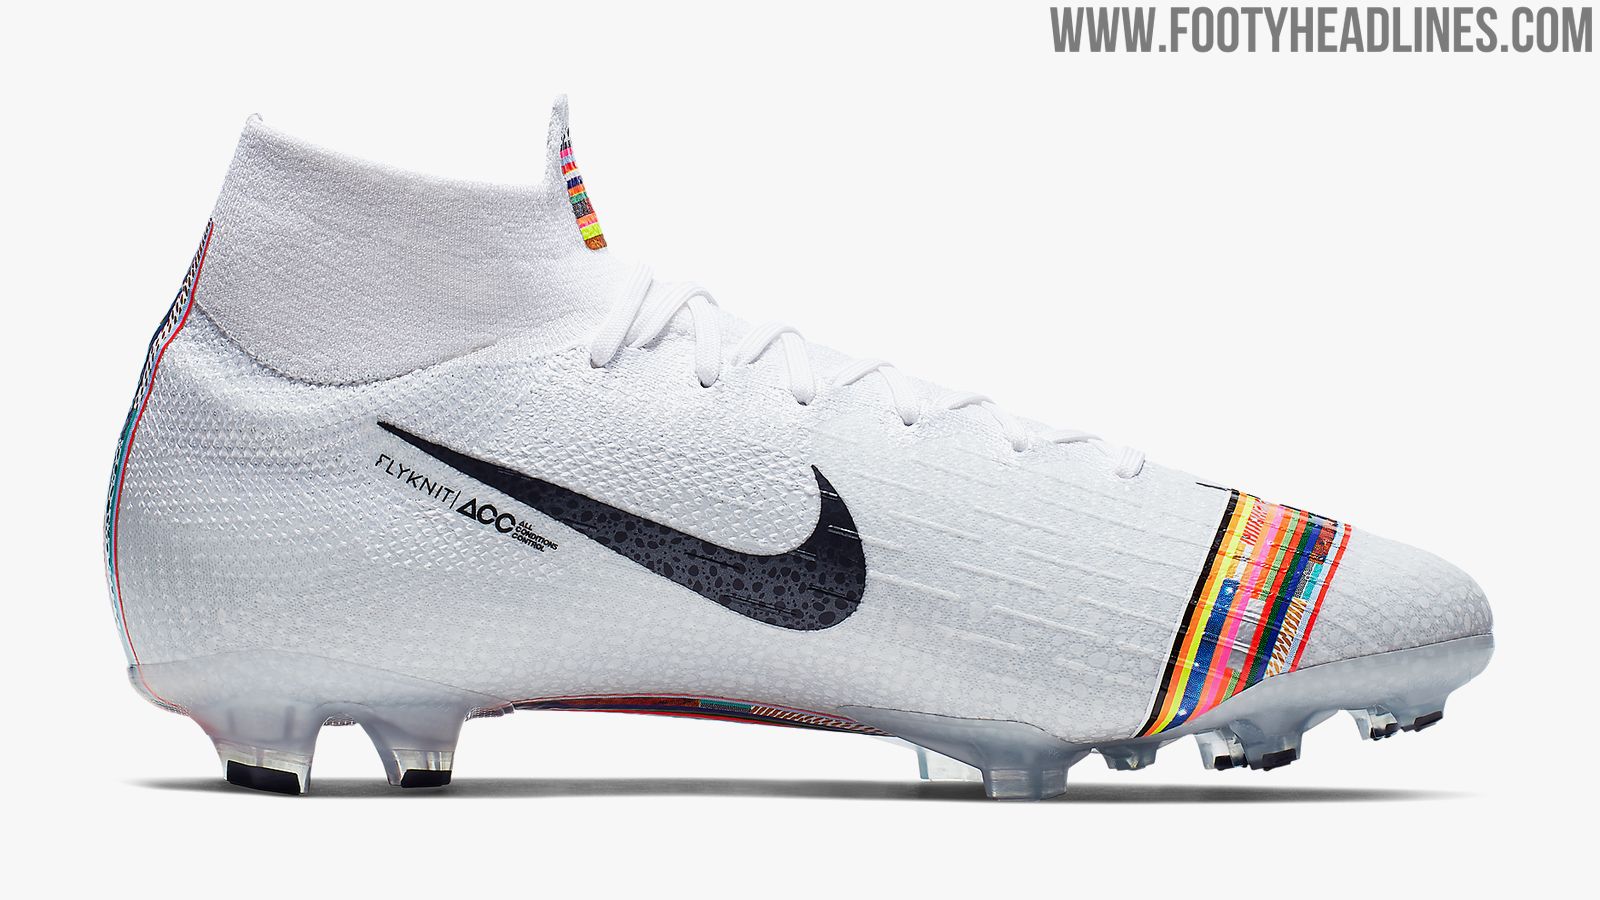 Nike Ronaldo 2019 Boots Released - Footy Headlines